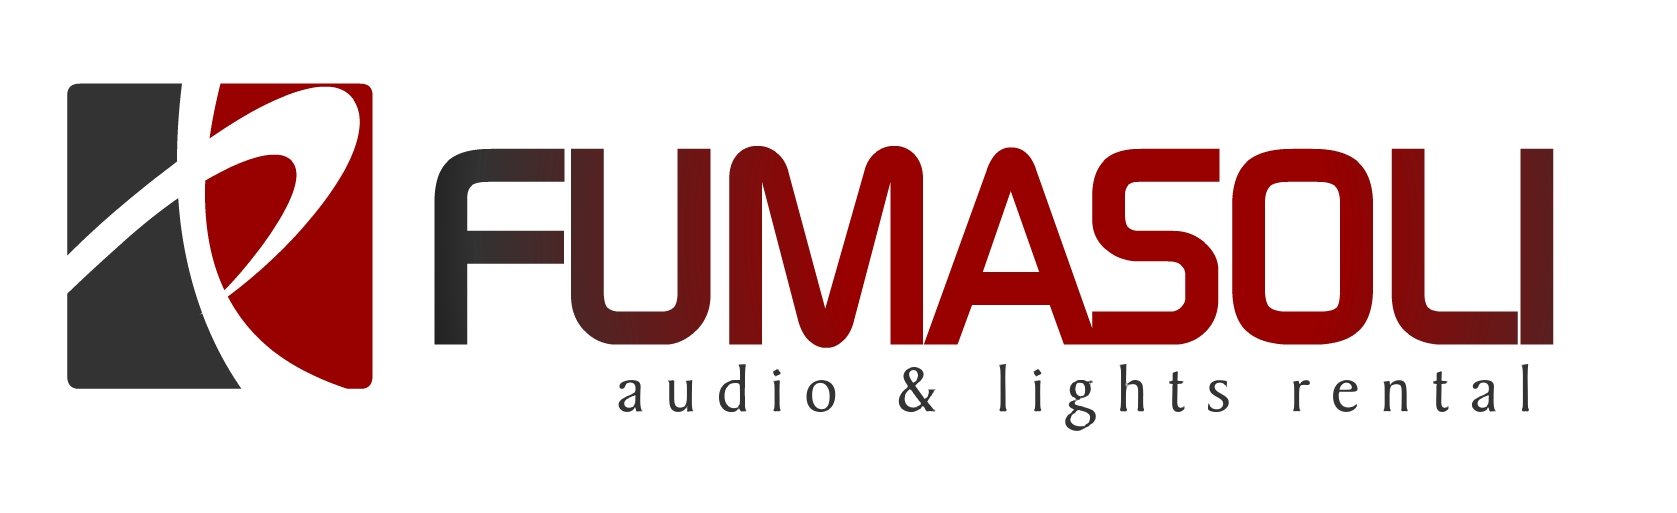 Contatti fumasoli audio & lights rental